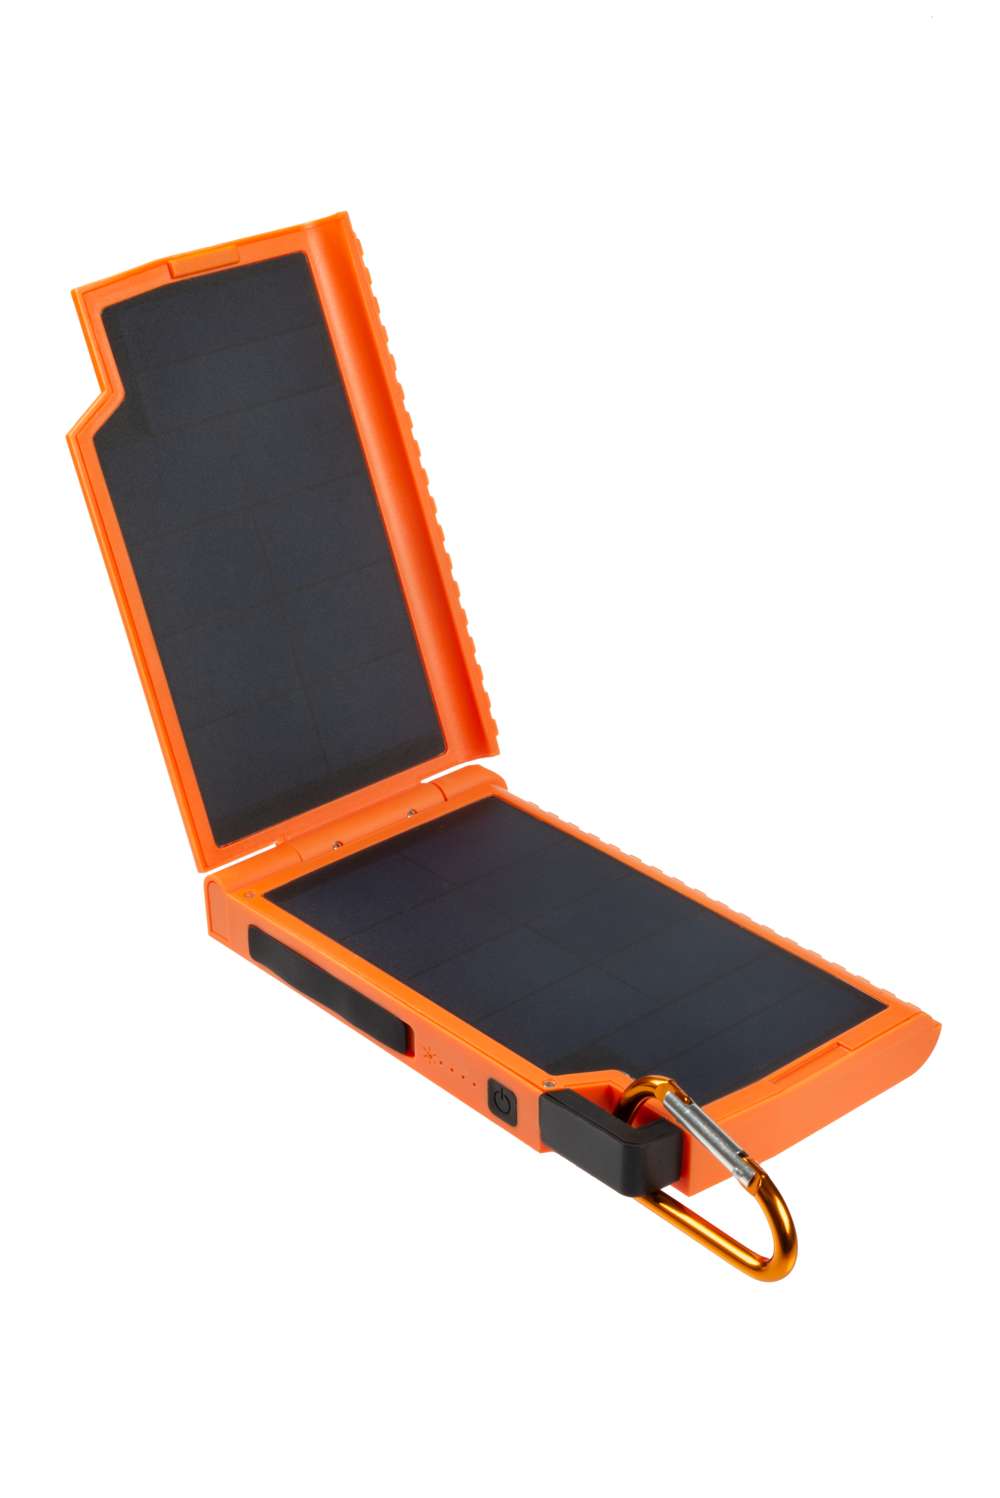 Xtreme Solar Powerbank - 10000 mAh - Orange